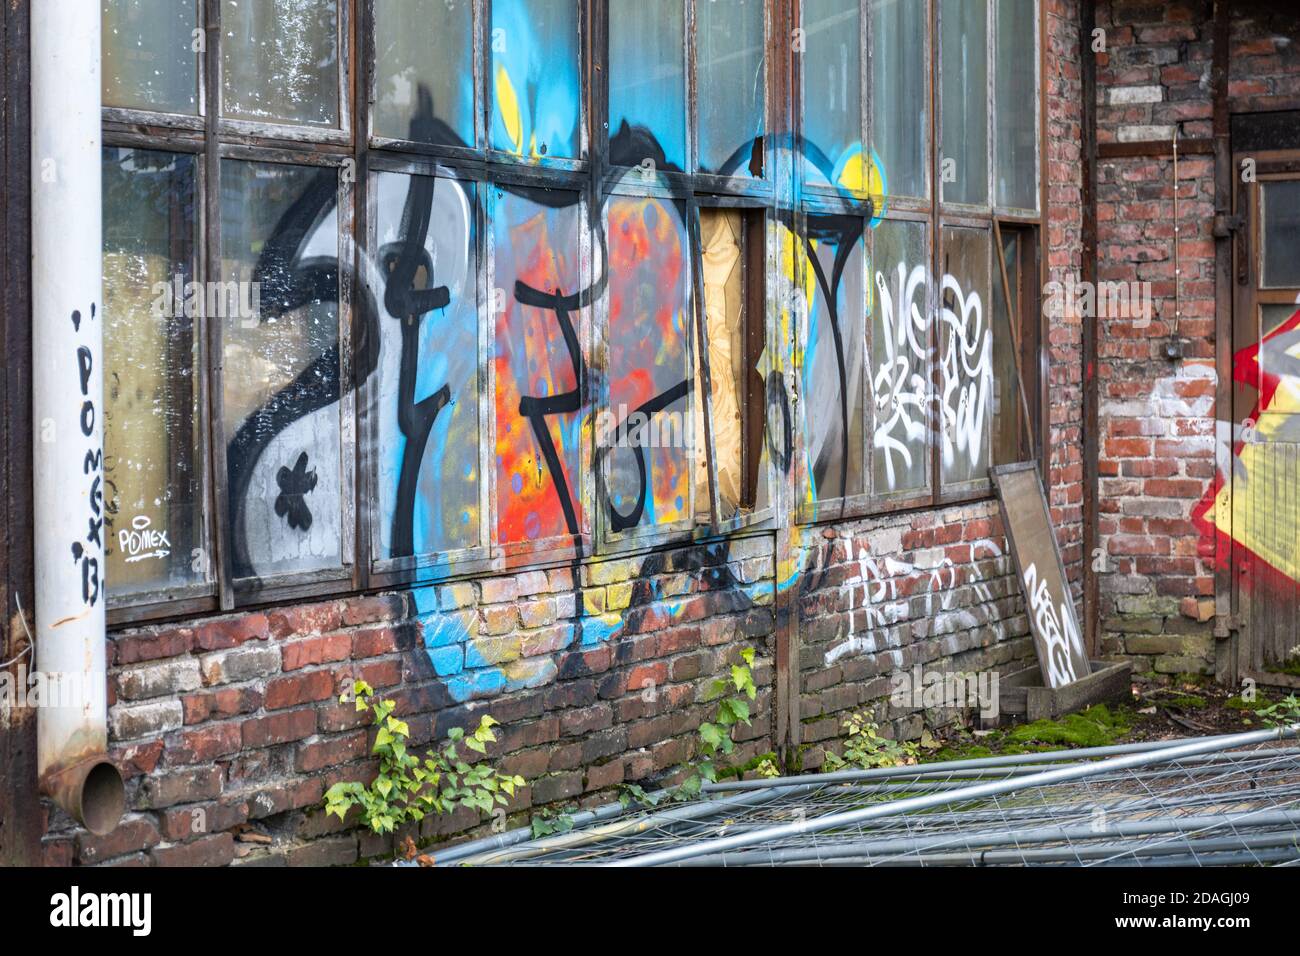 Graffiti on old industrial building in Konepaja district of Helsinki, Finland Stock Photo